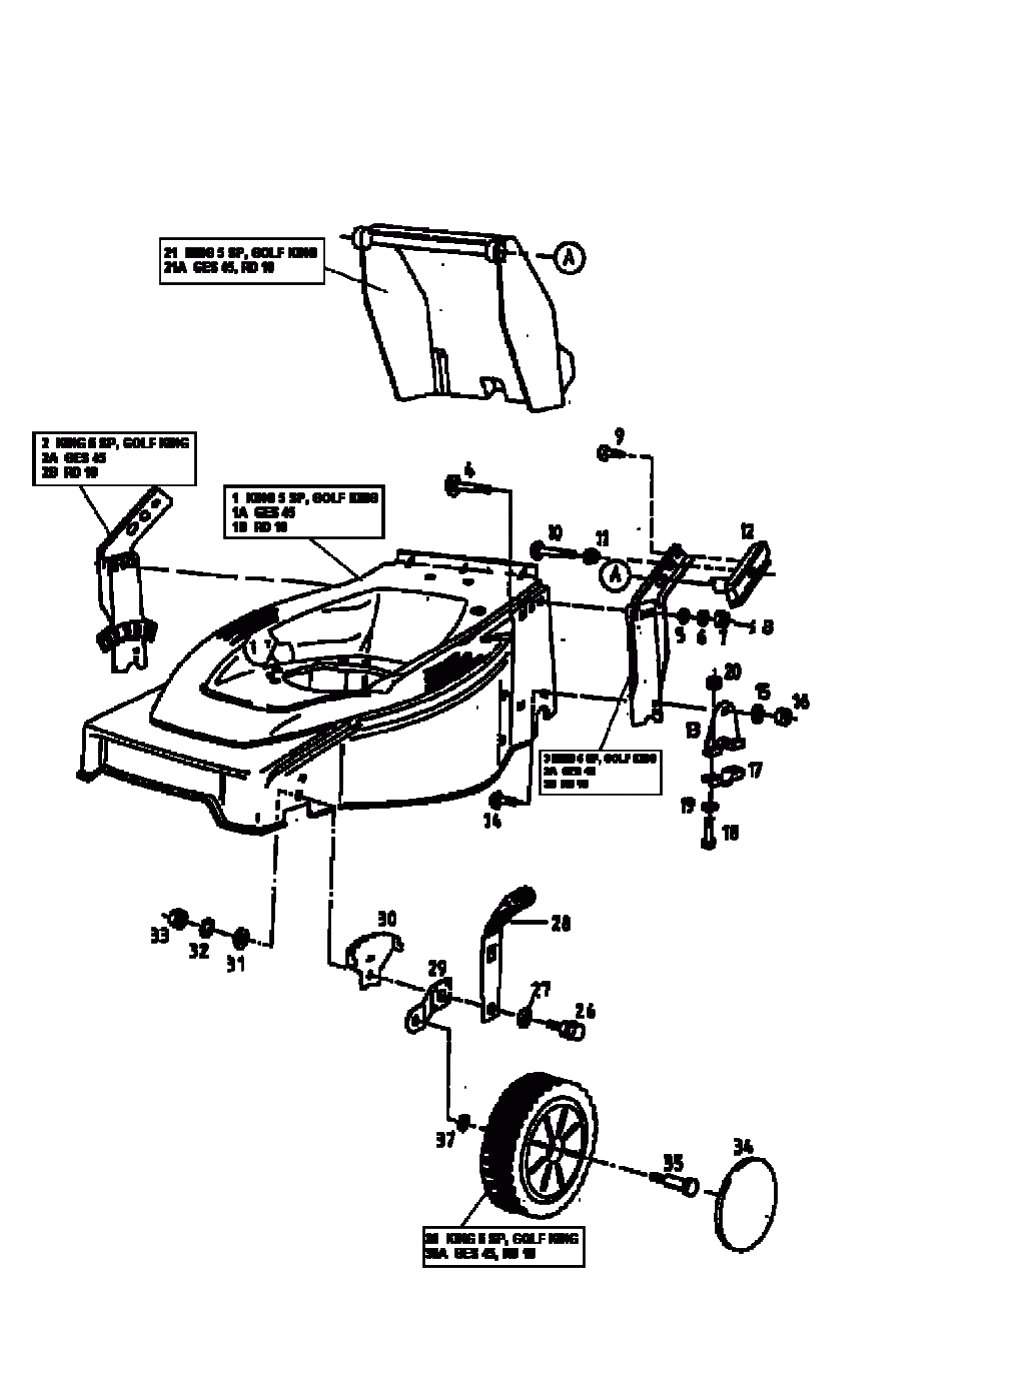 MTD Артикул 12B-T02Z678 (год выпуска 1999). Передние колеса, регулятор высоты реза